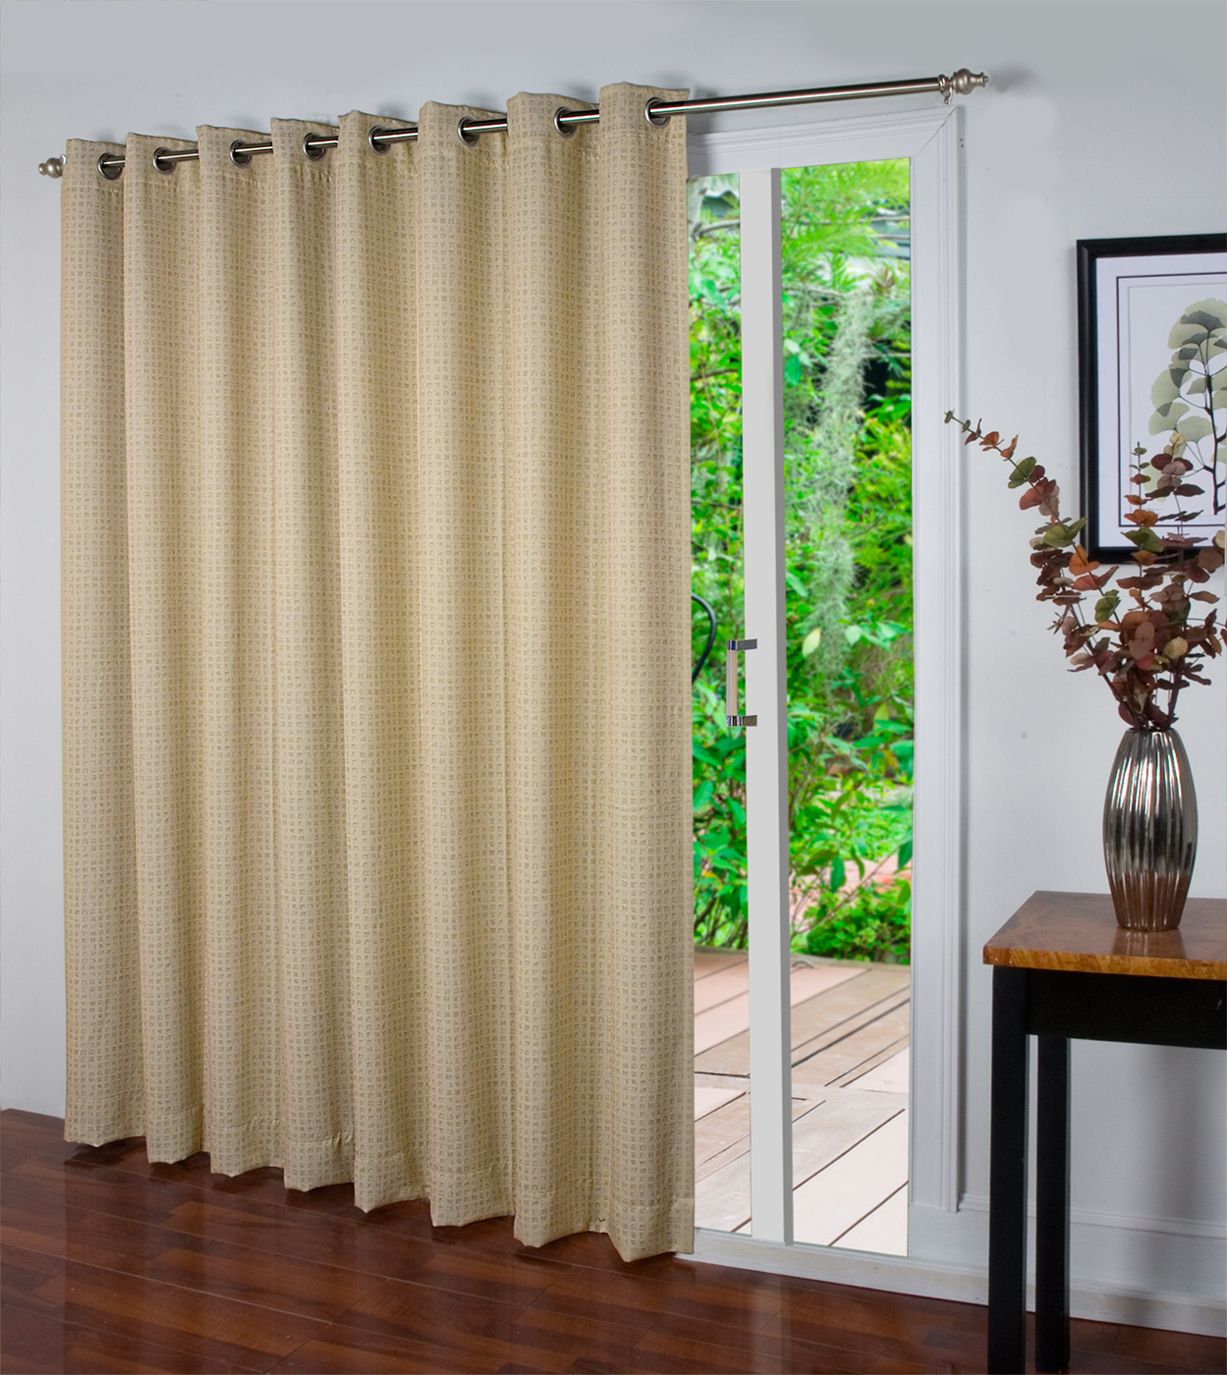 Patio Door Curtains – Thecurtainshop With Regard To Grommet Blackout Patio Door Window Curtain Panels (View 19 of 20)